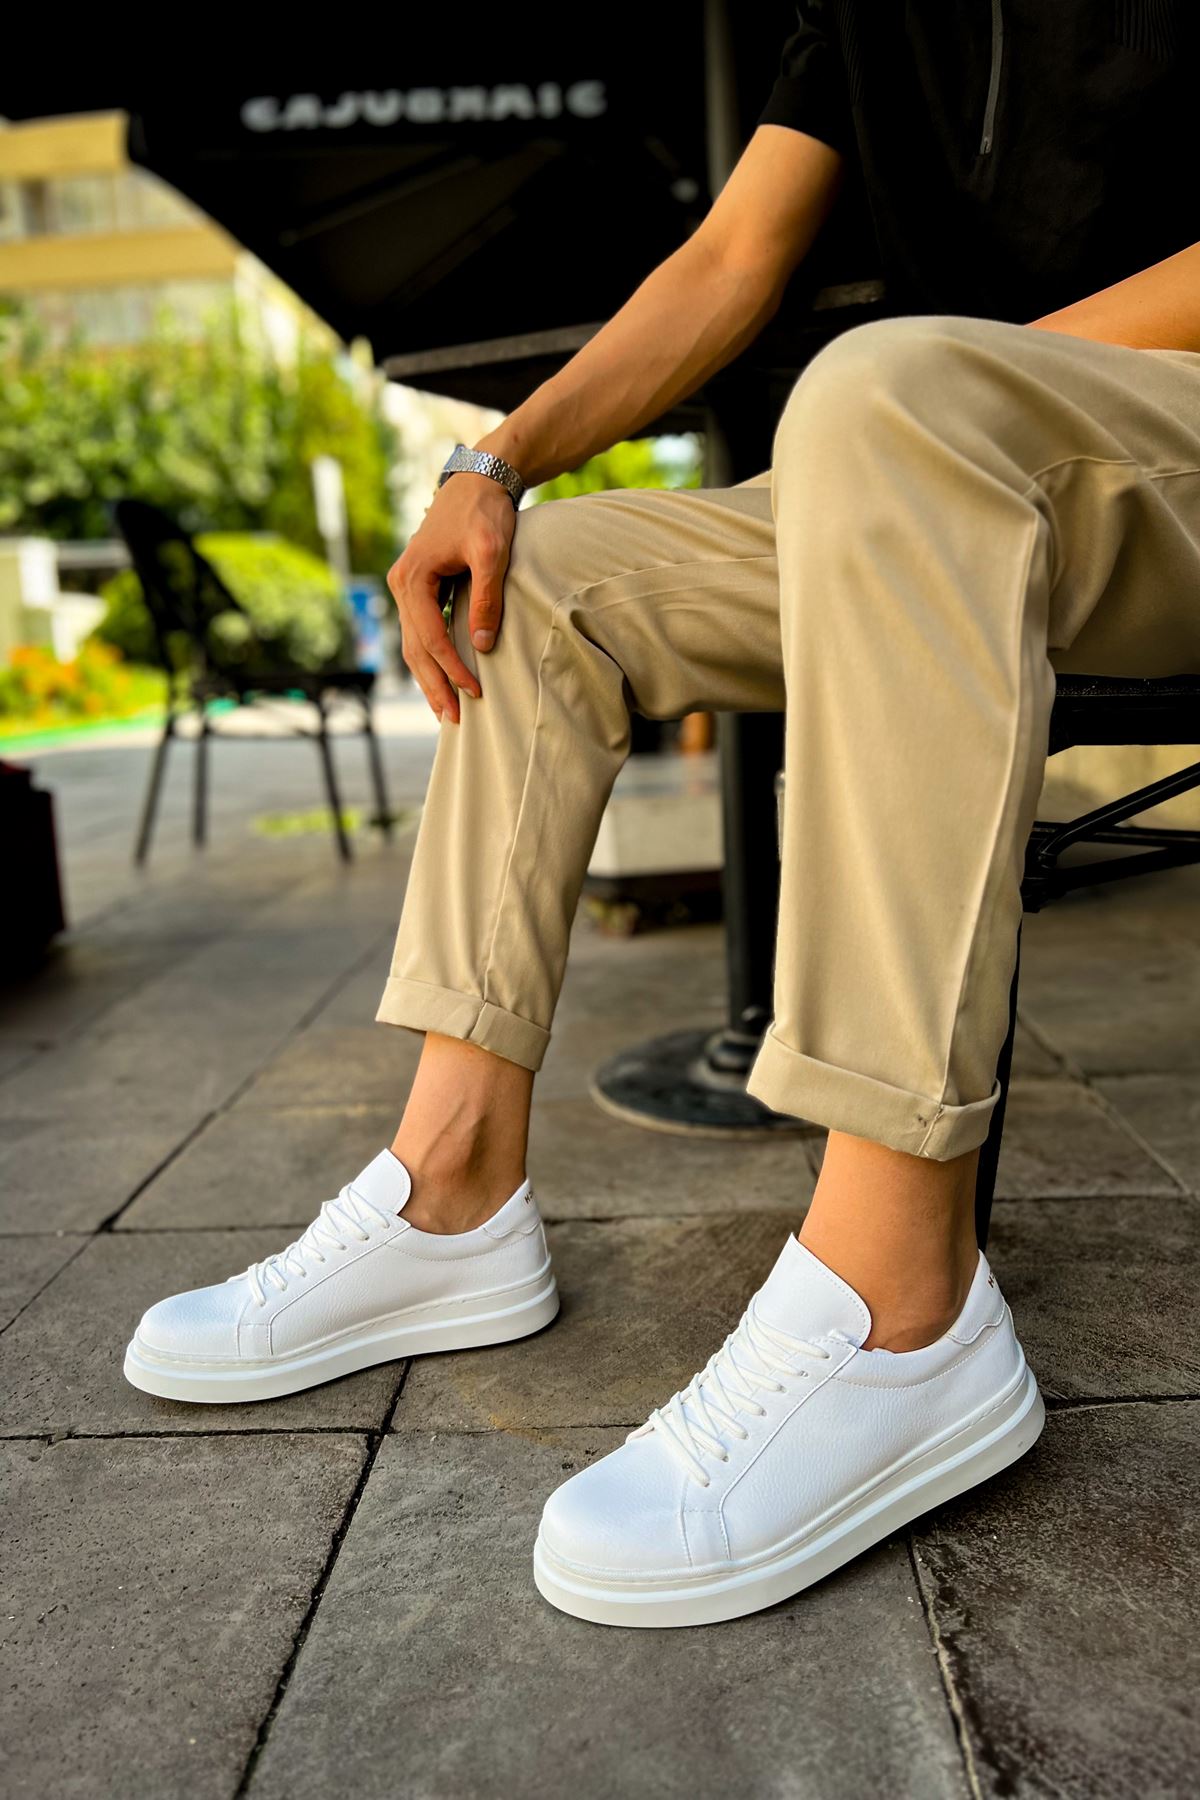 CH979 Santoni CRT Sport Men's Sneakers Shoes WHITE - STREETMODE ™